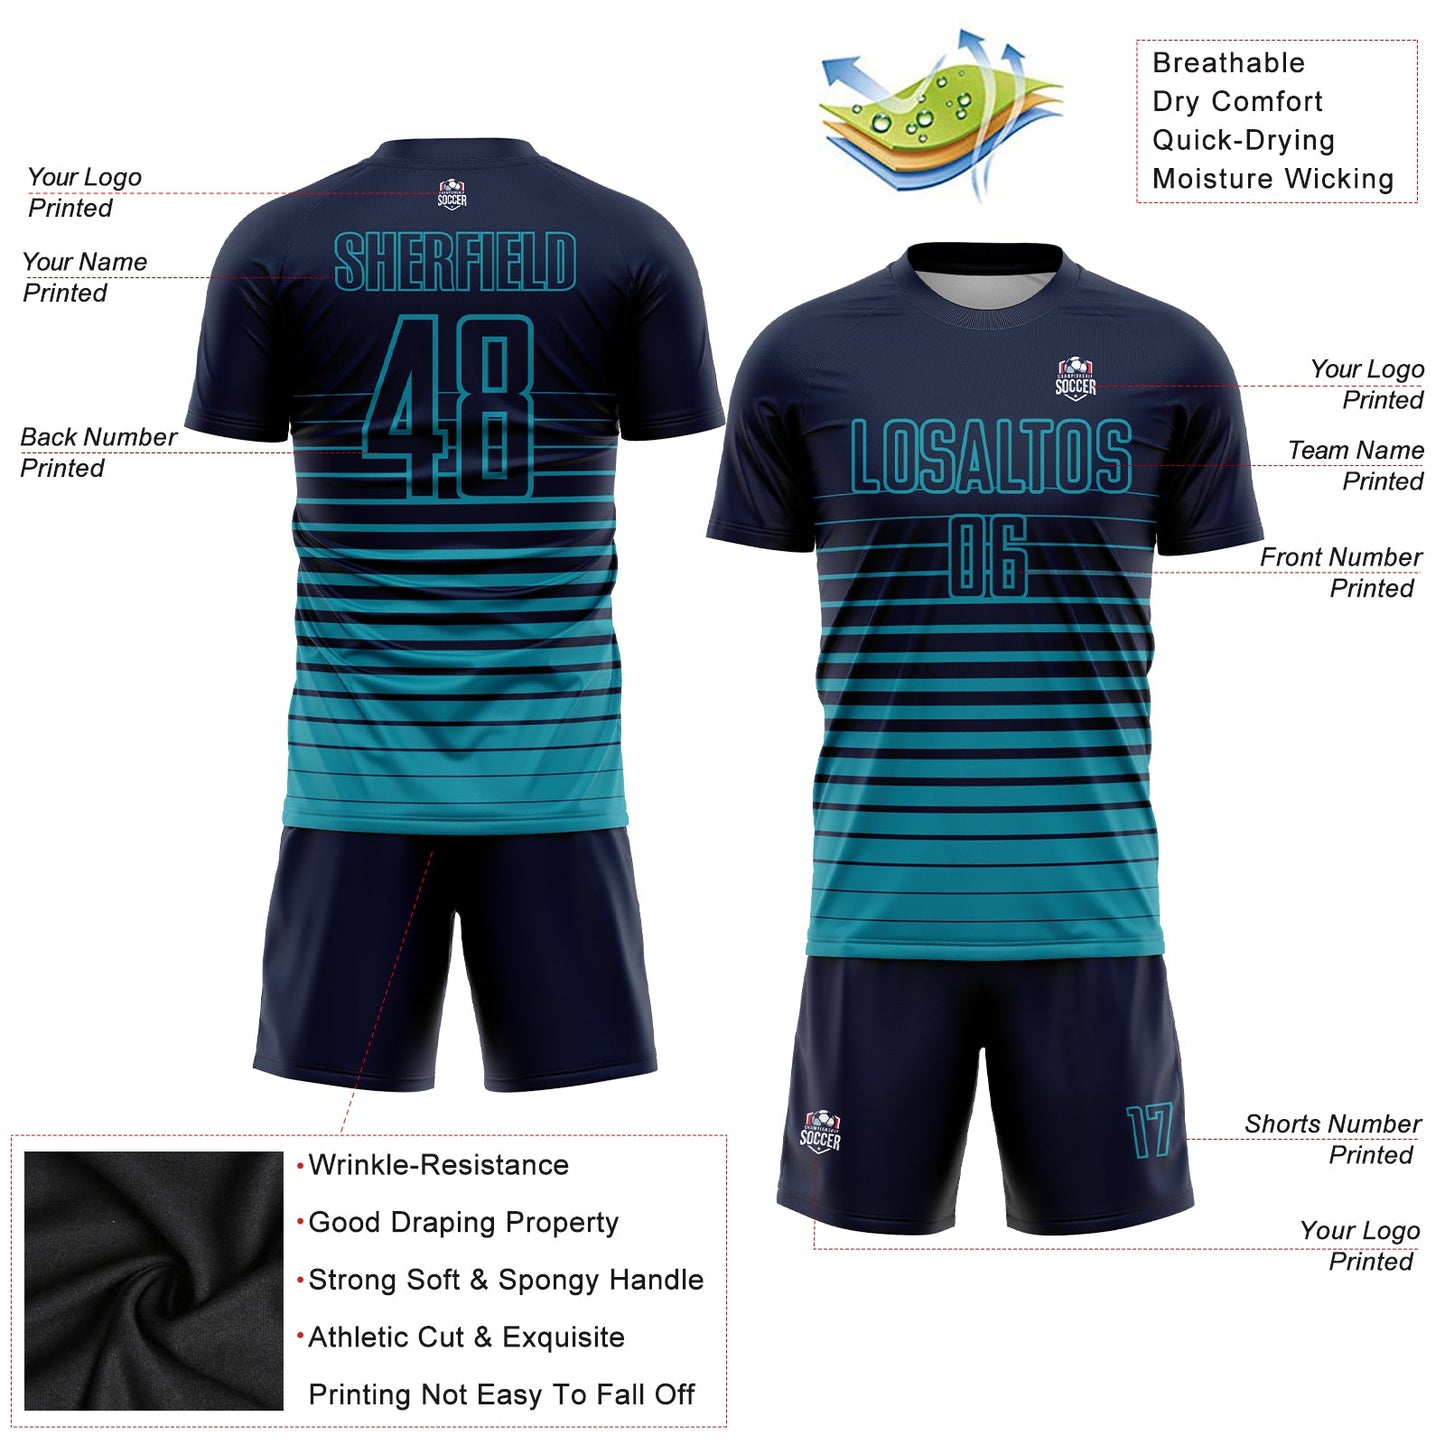 Custom Navy Teal Pinstripe Fade Fashion Sublimation Soccer Uniform Jersey